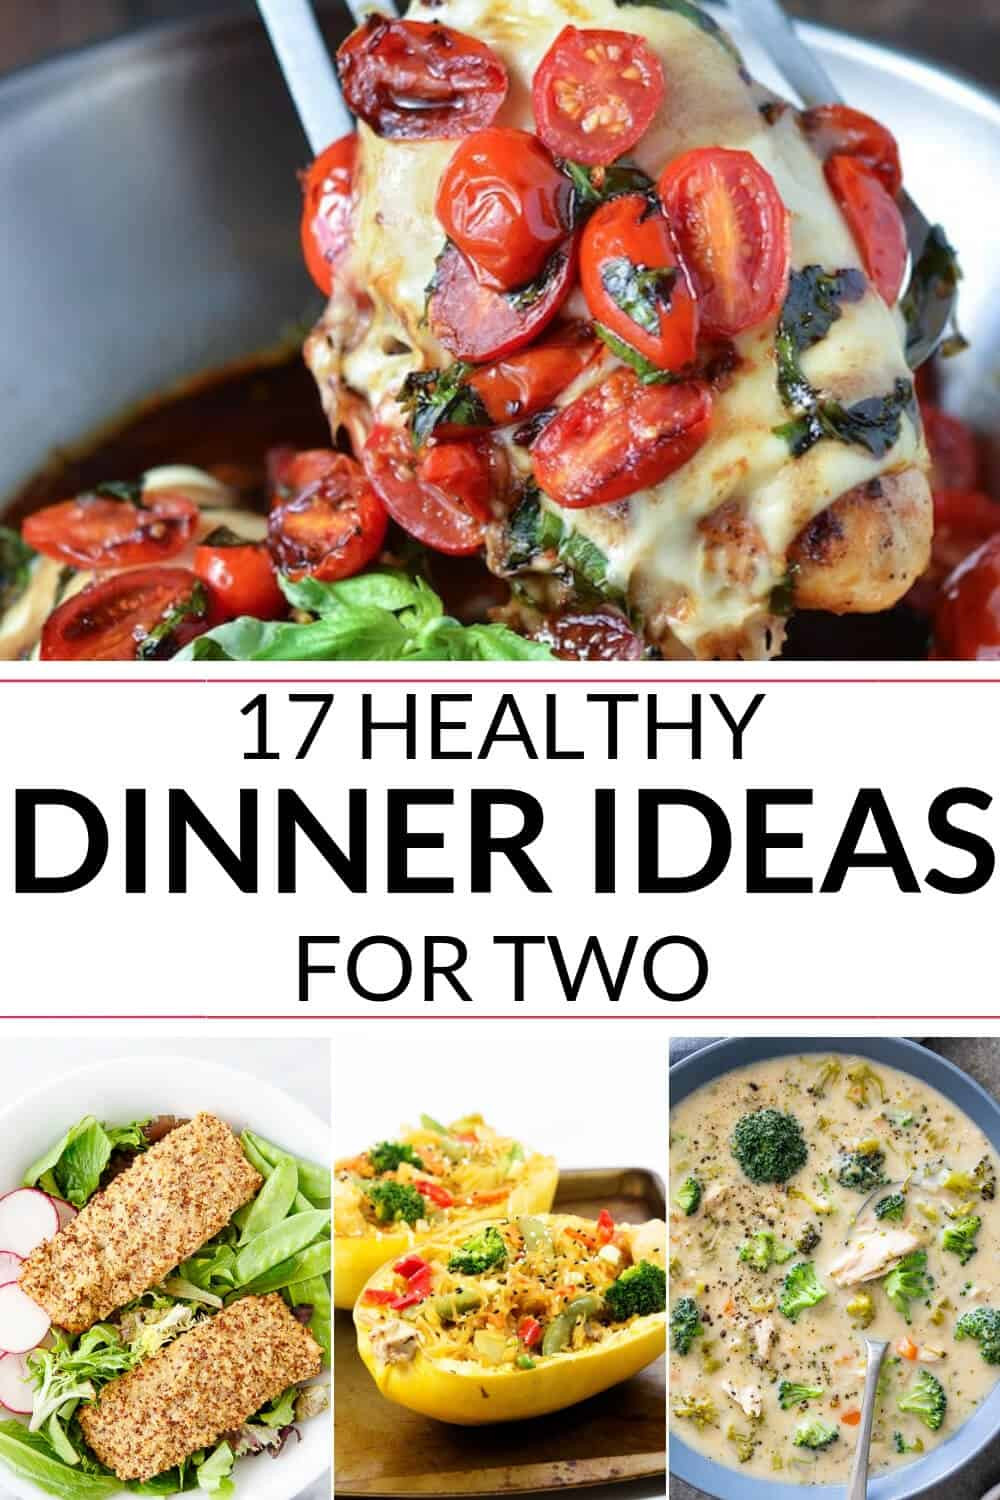 Pinterest Dinner Ideas
 Healthy Dinner Ideas for Two